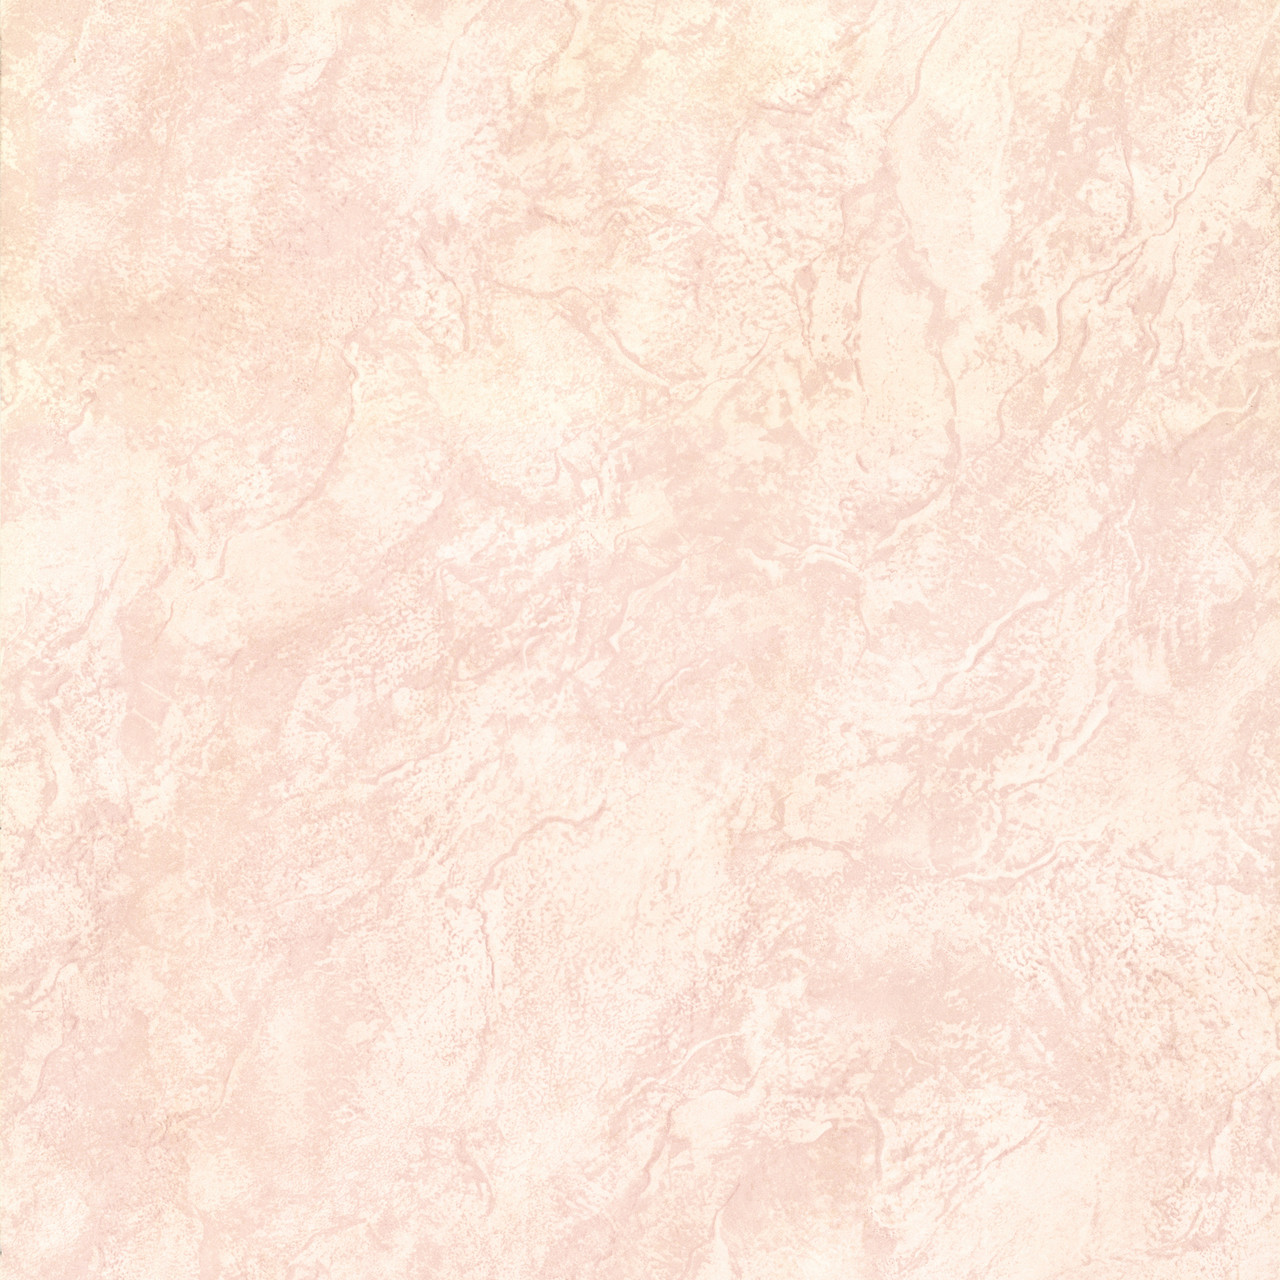 414-43560 - Quartz Light Pink Marble Texture wallpaper